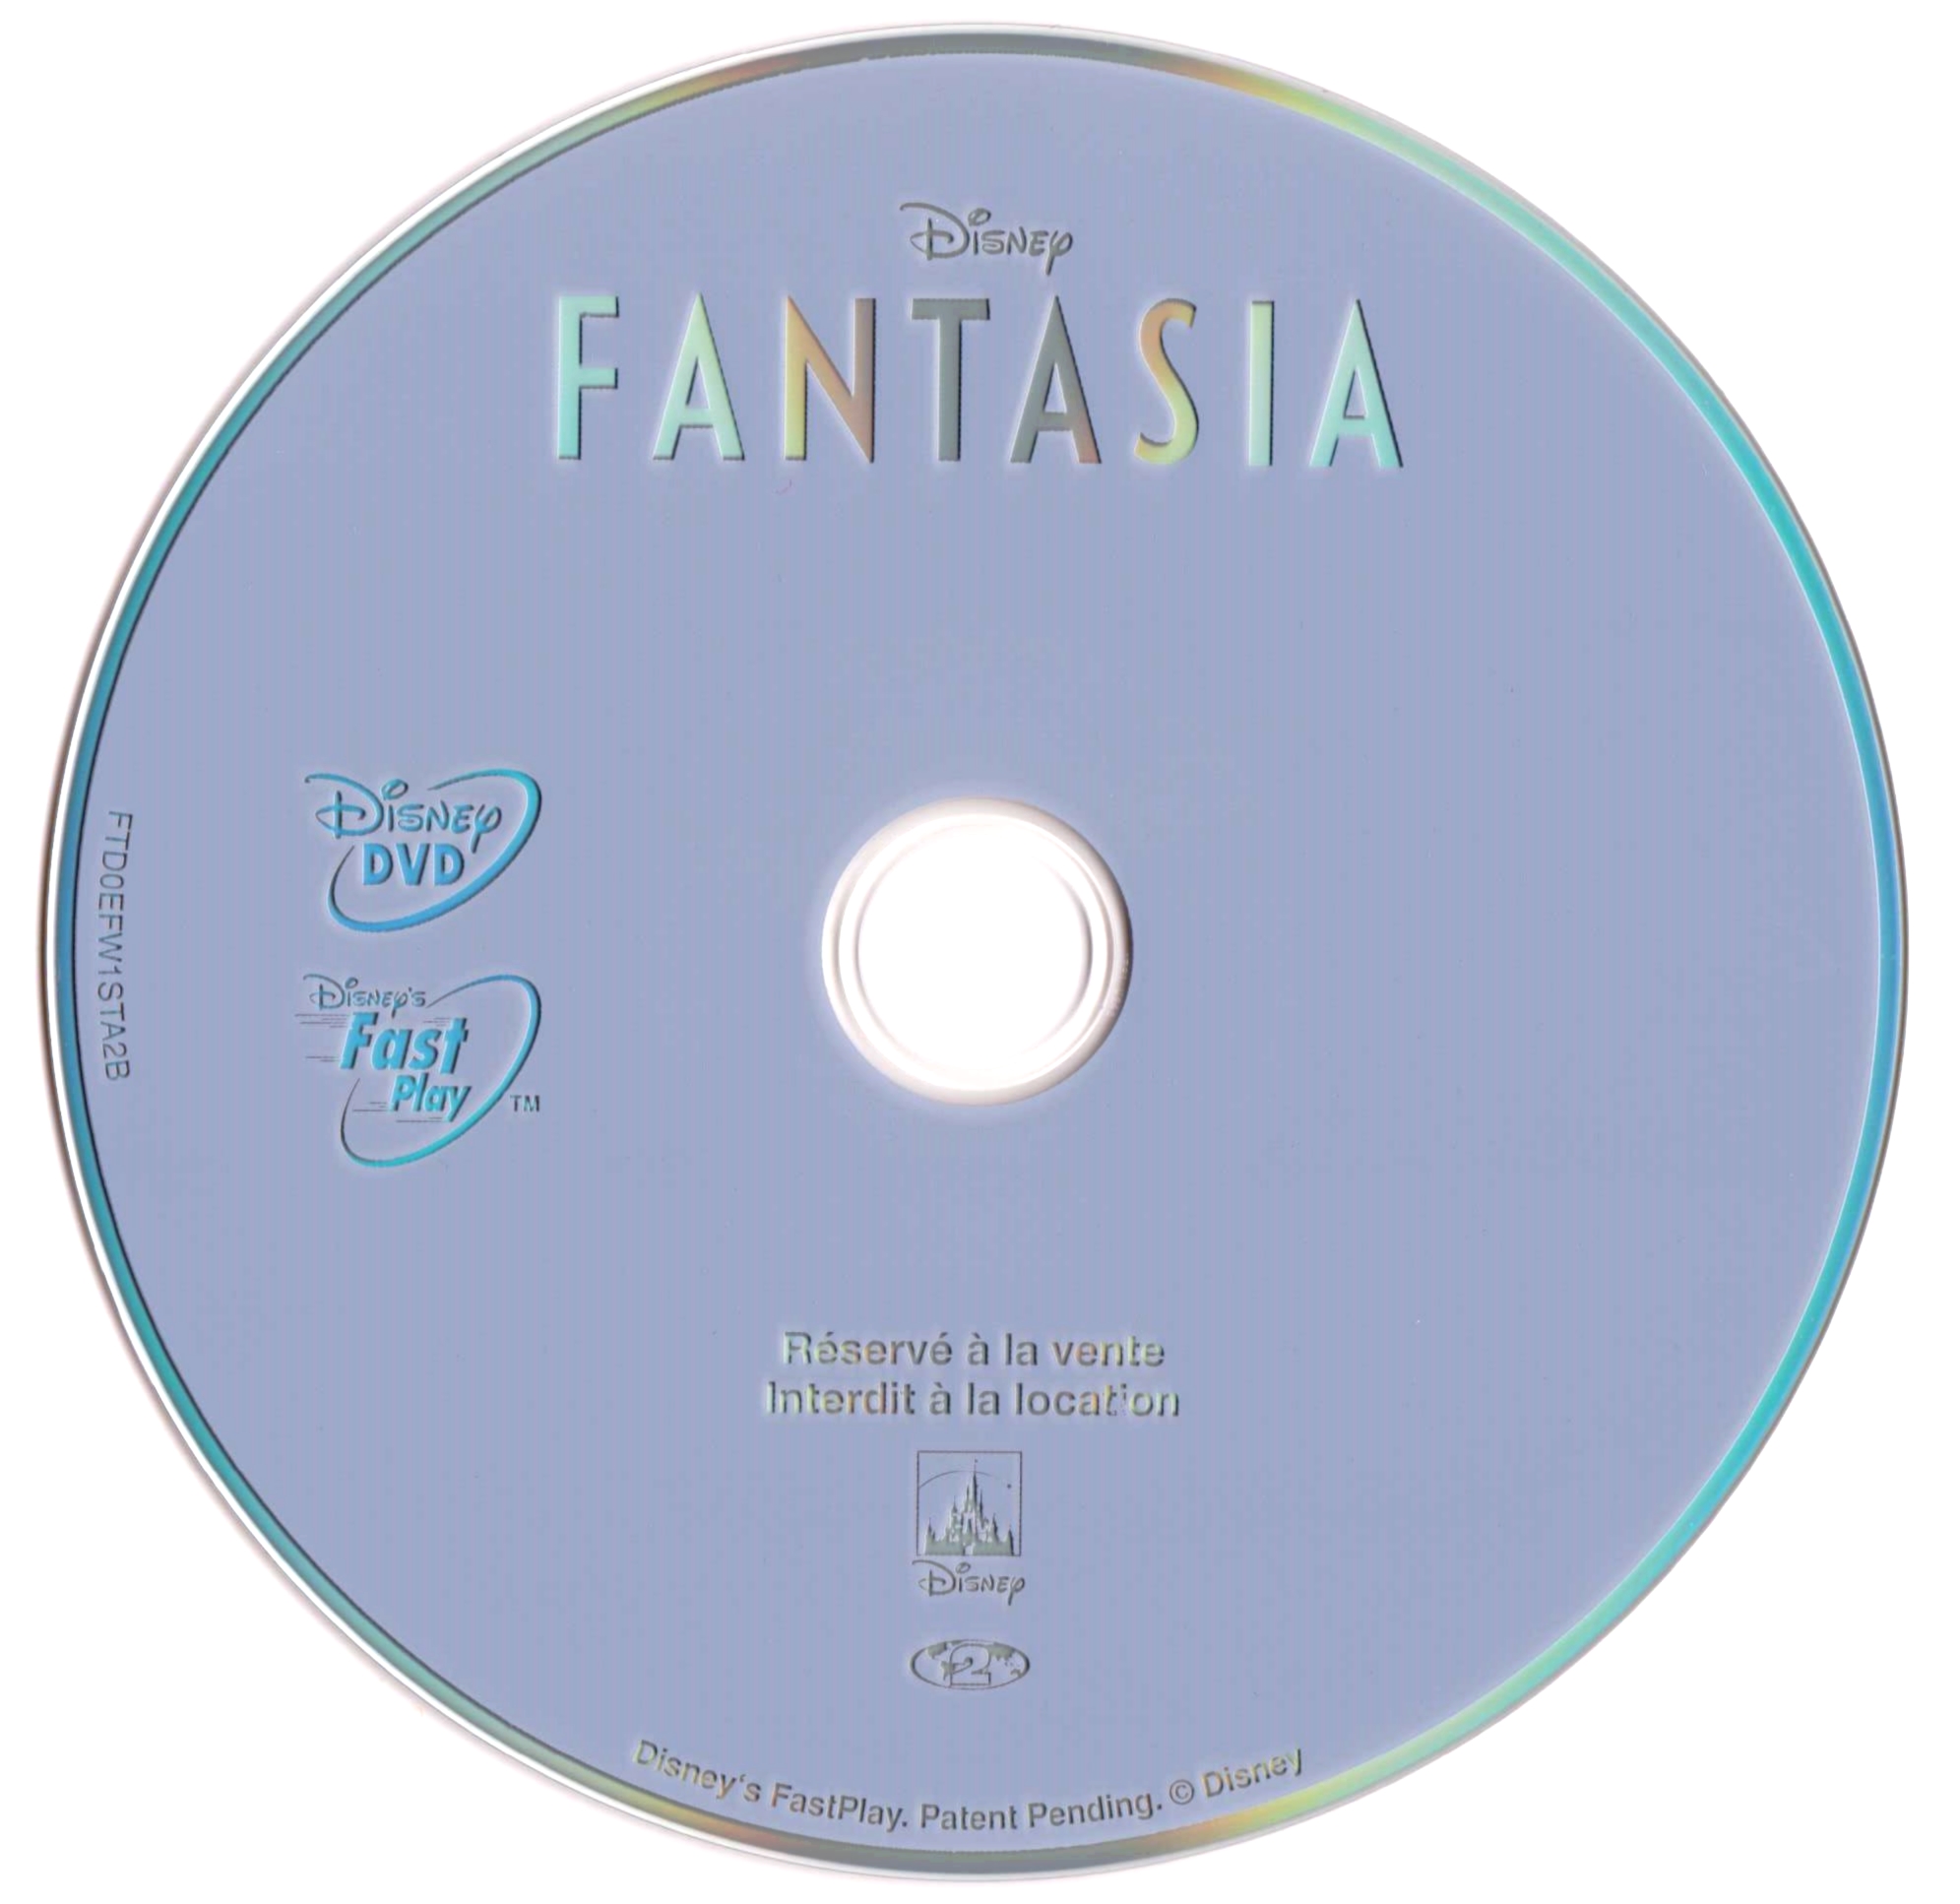 Fantasia v2